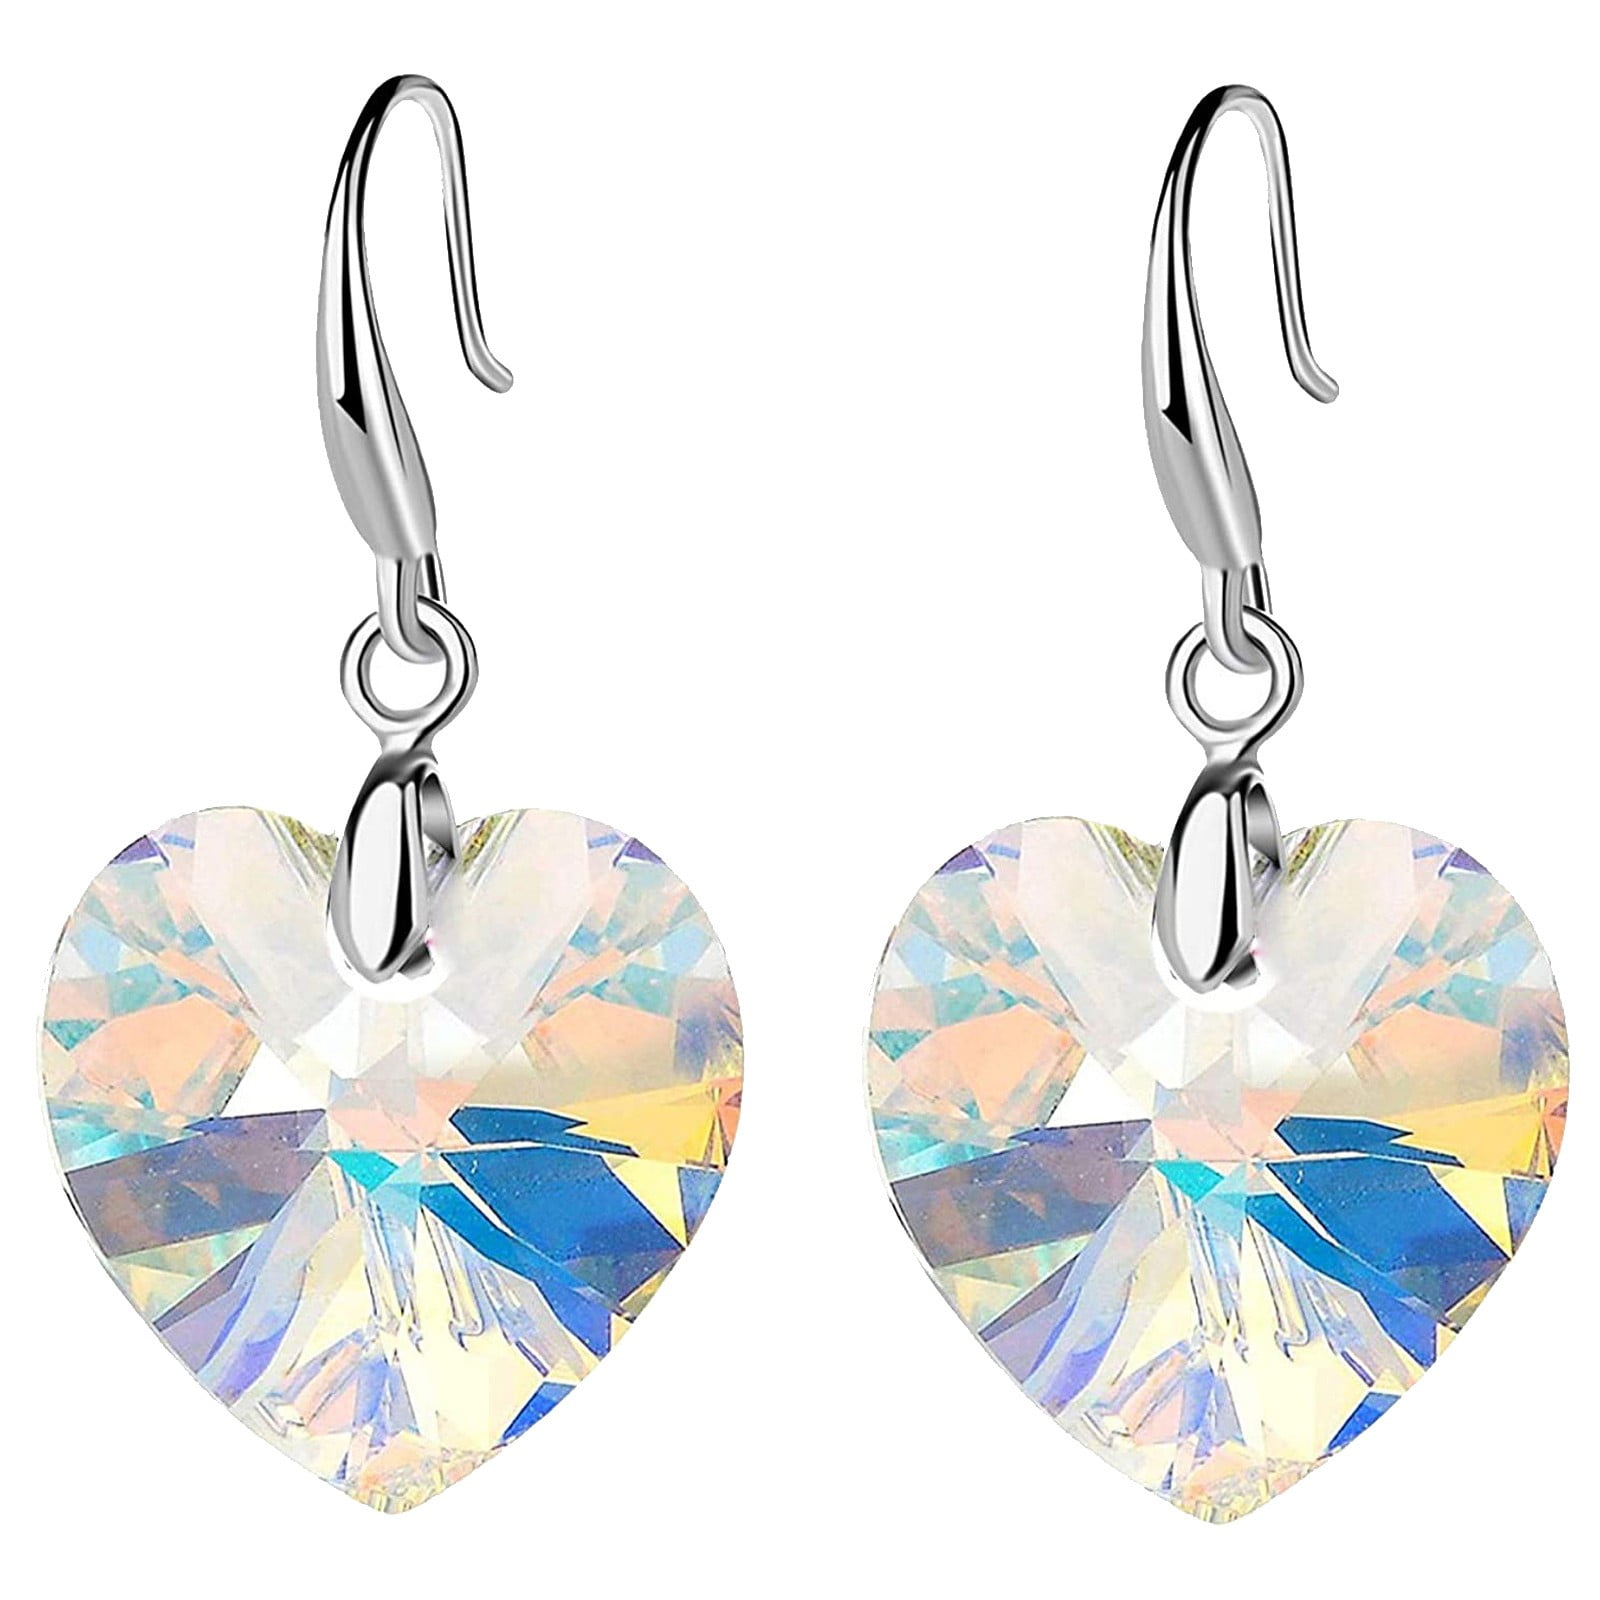 dangling faceted iridescent heart earrings